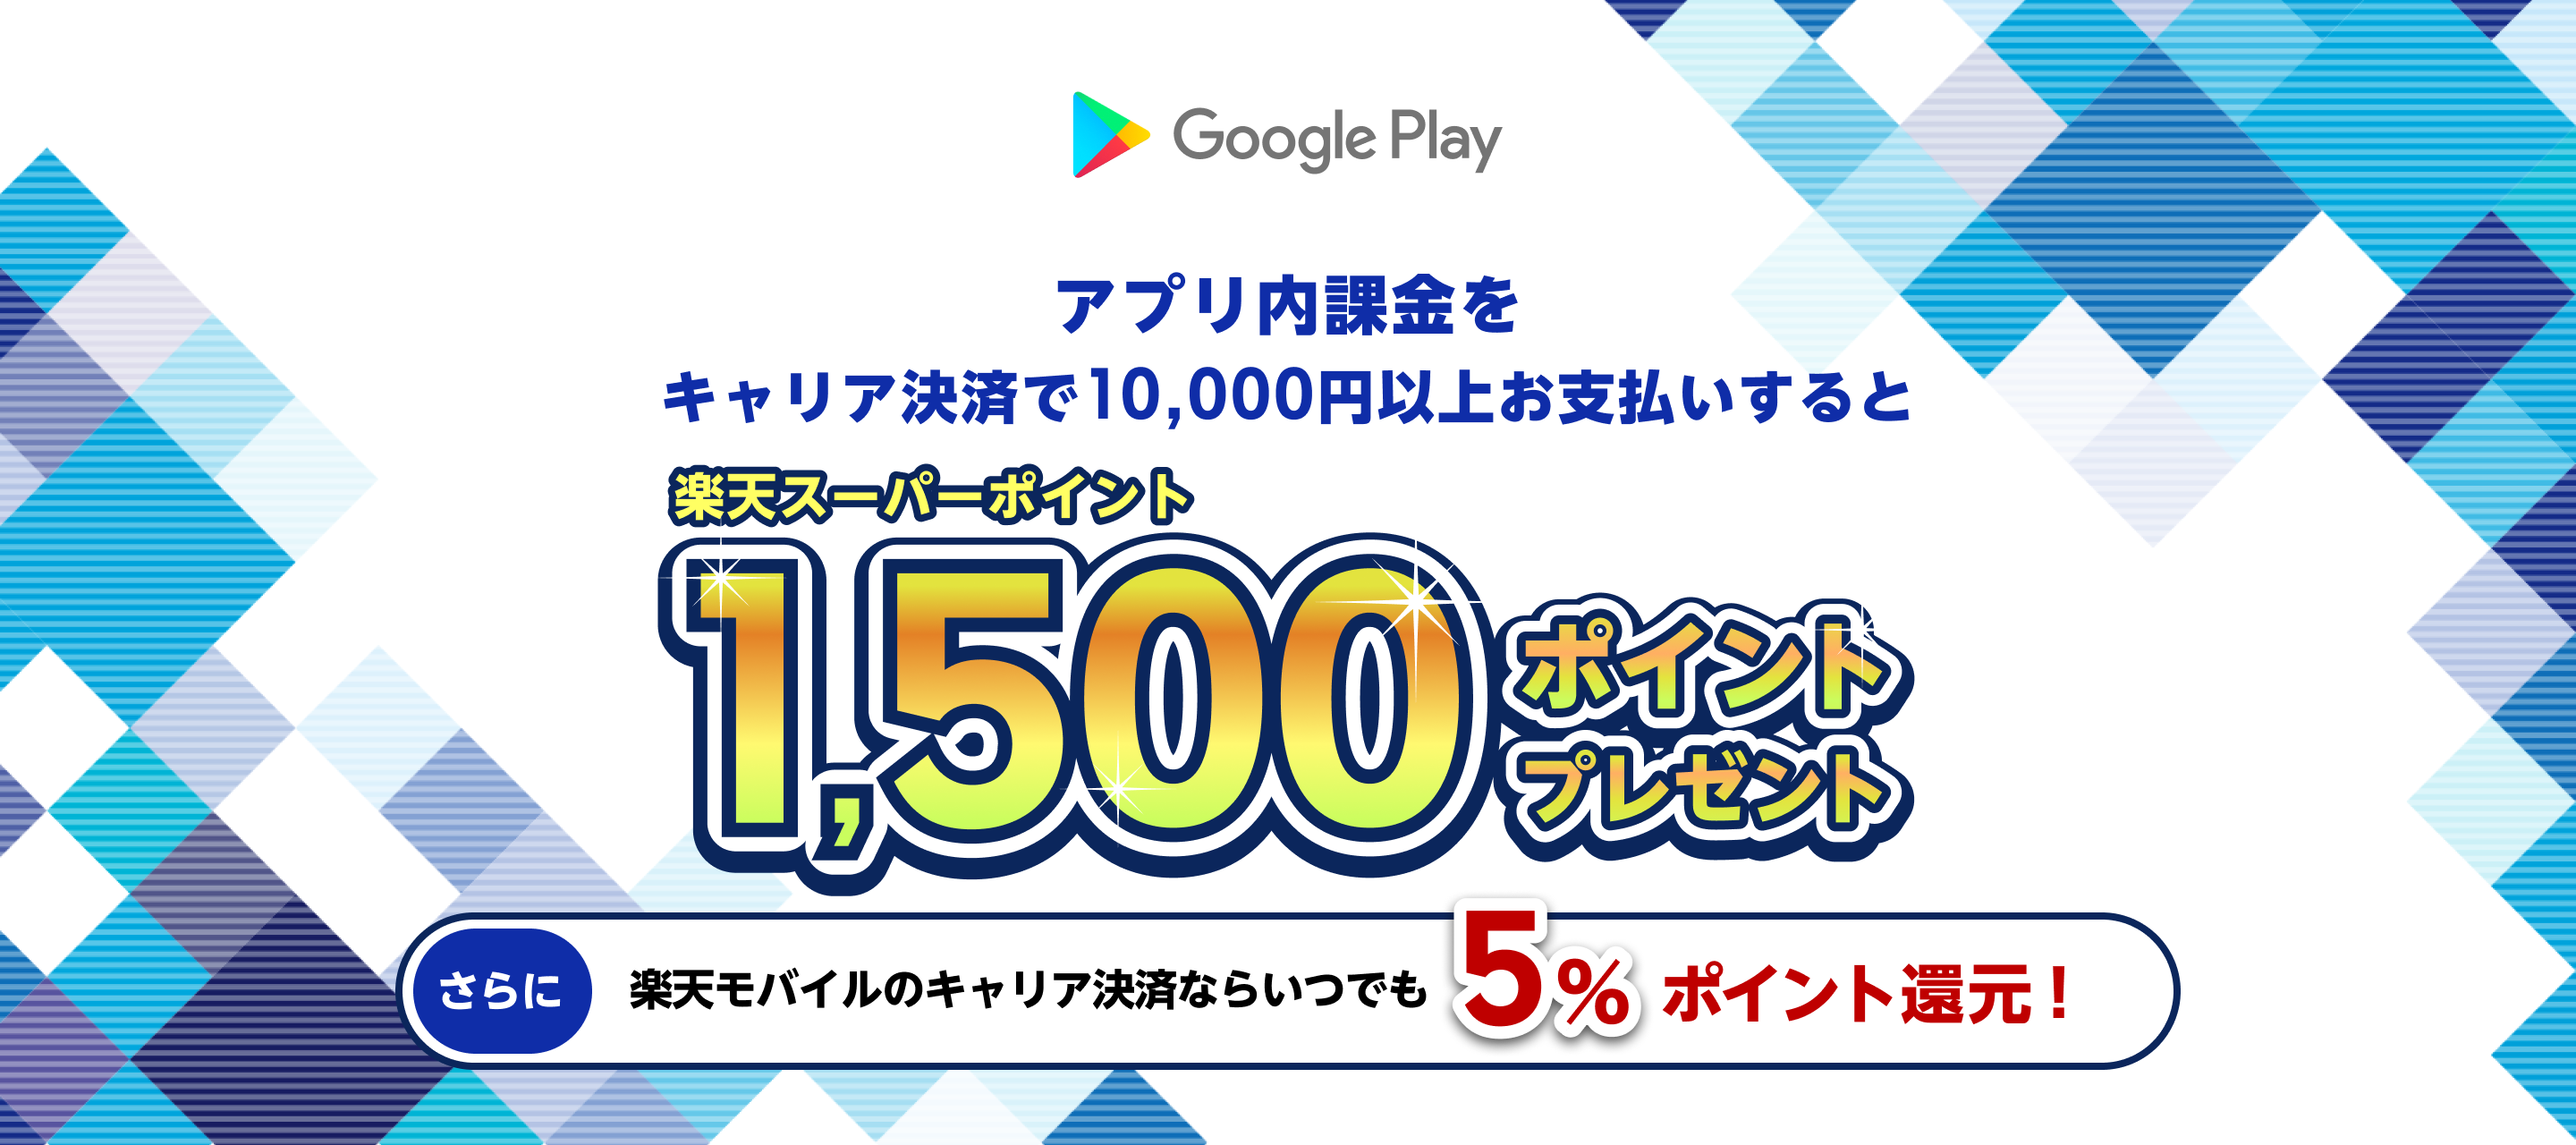 Google Play アプリ内課金をキャリア決済で10,000円以上お支払いすると楽天ポイント1,500ポイントプレゼント